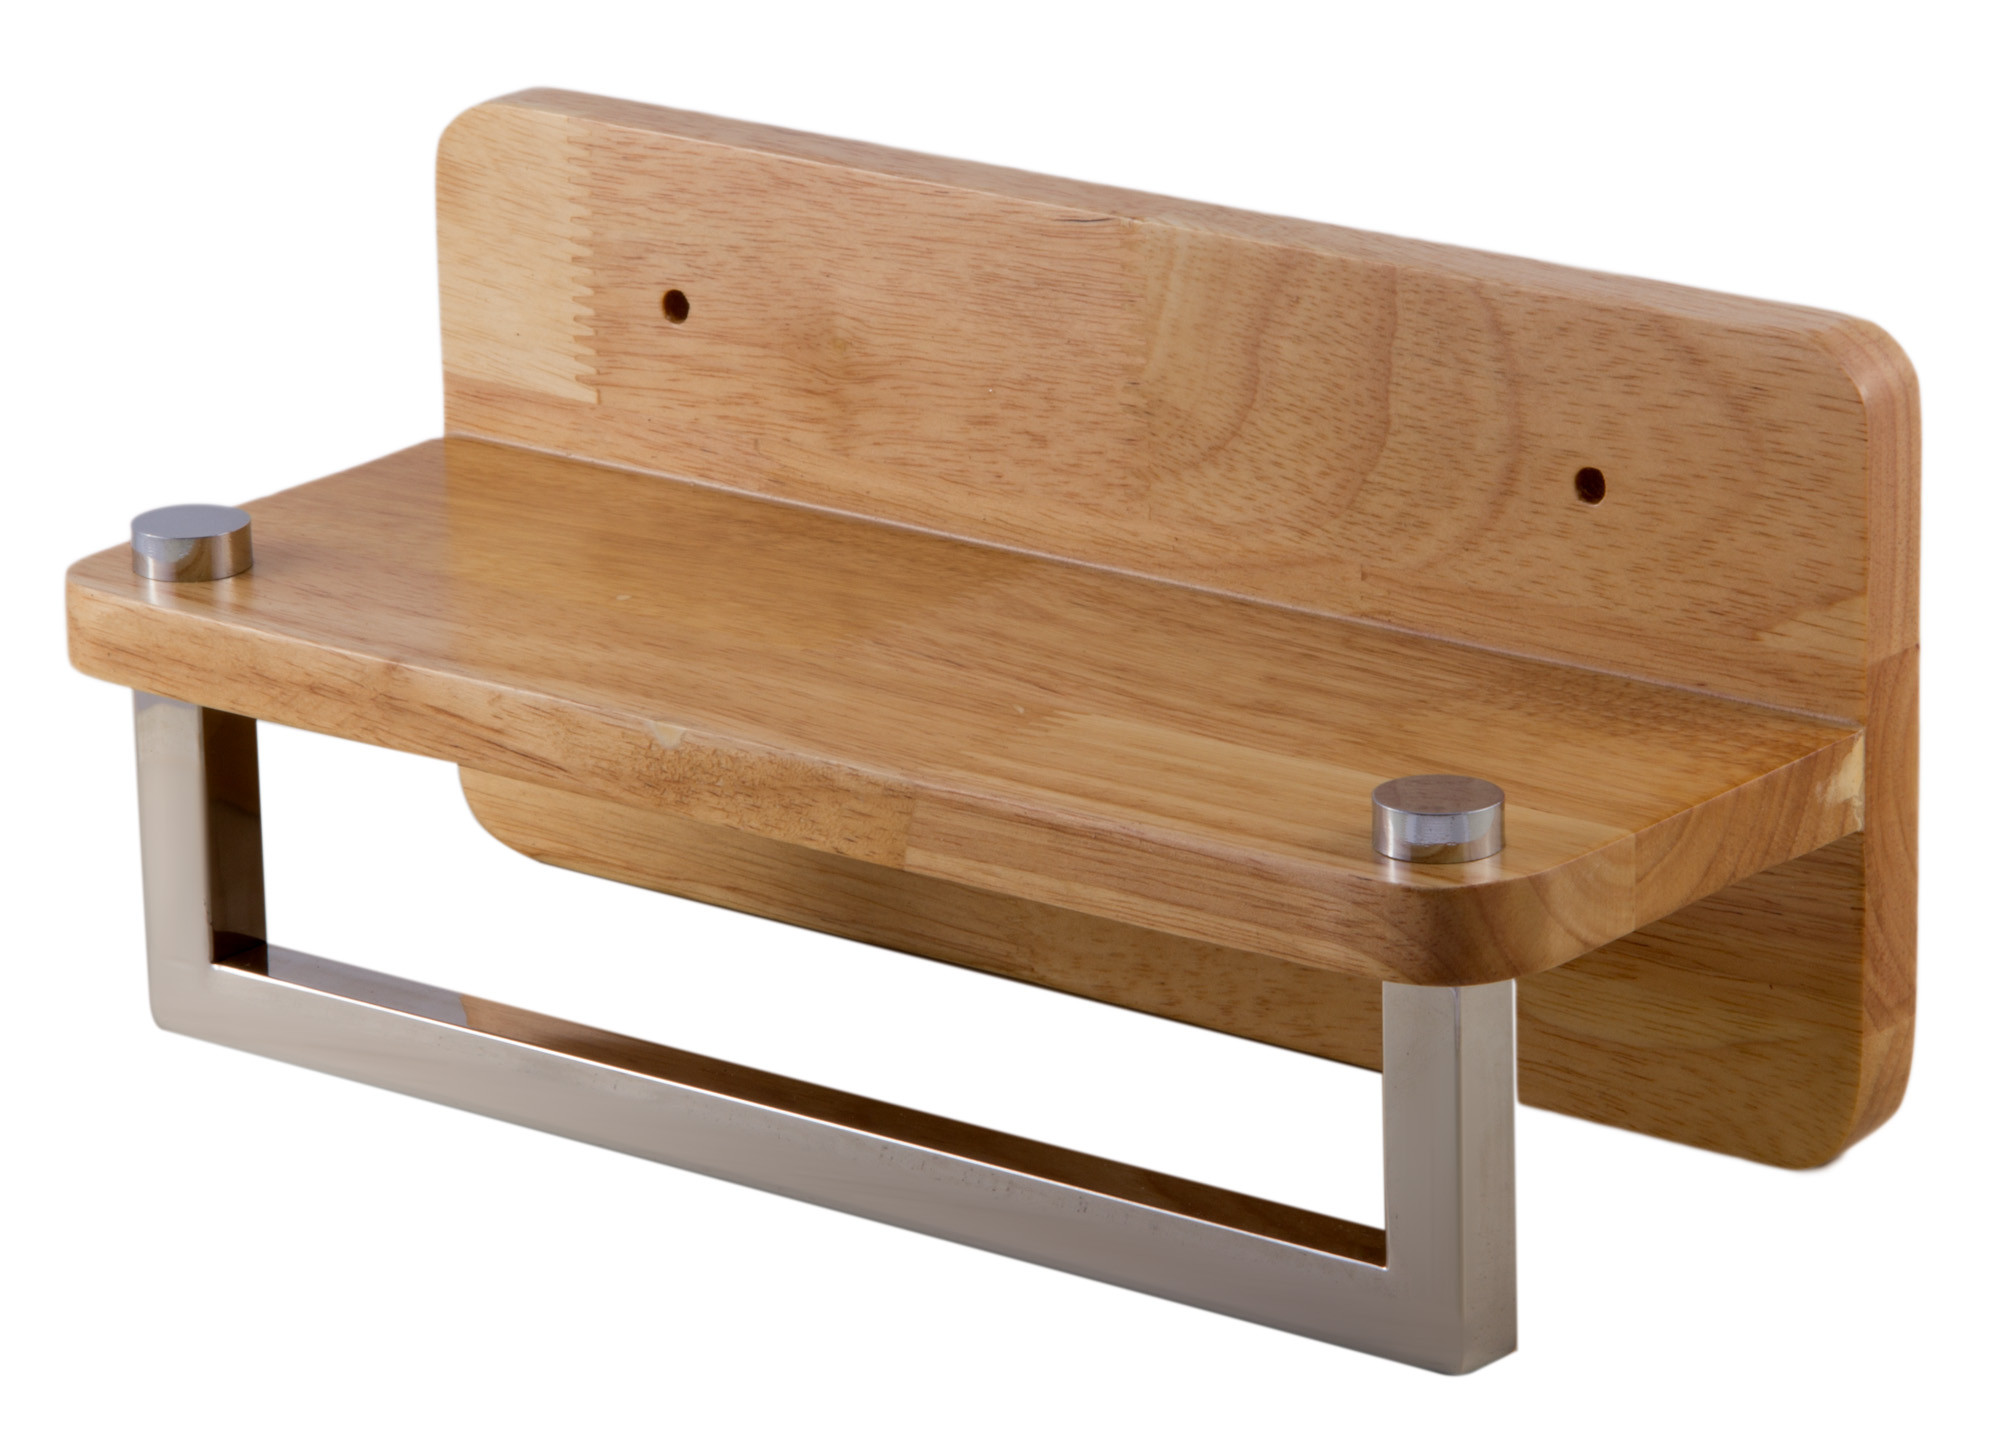 ALFI brand AB5510 12 Inch Small Wooden Shelf With Chrome Towel Bar